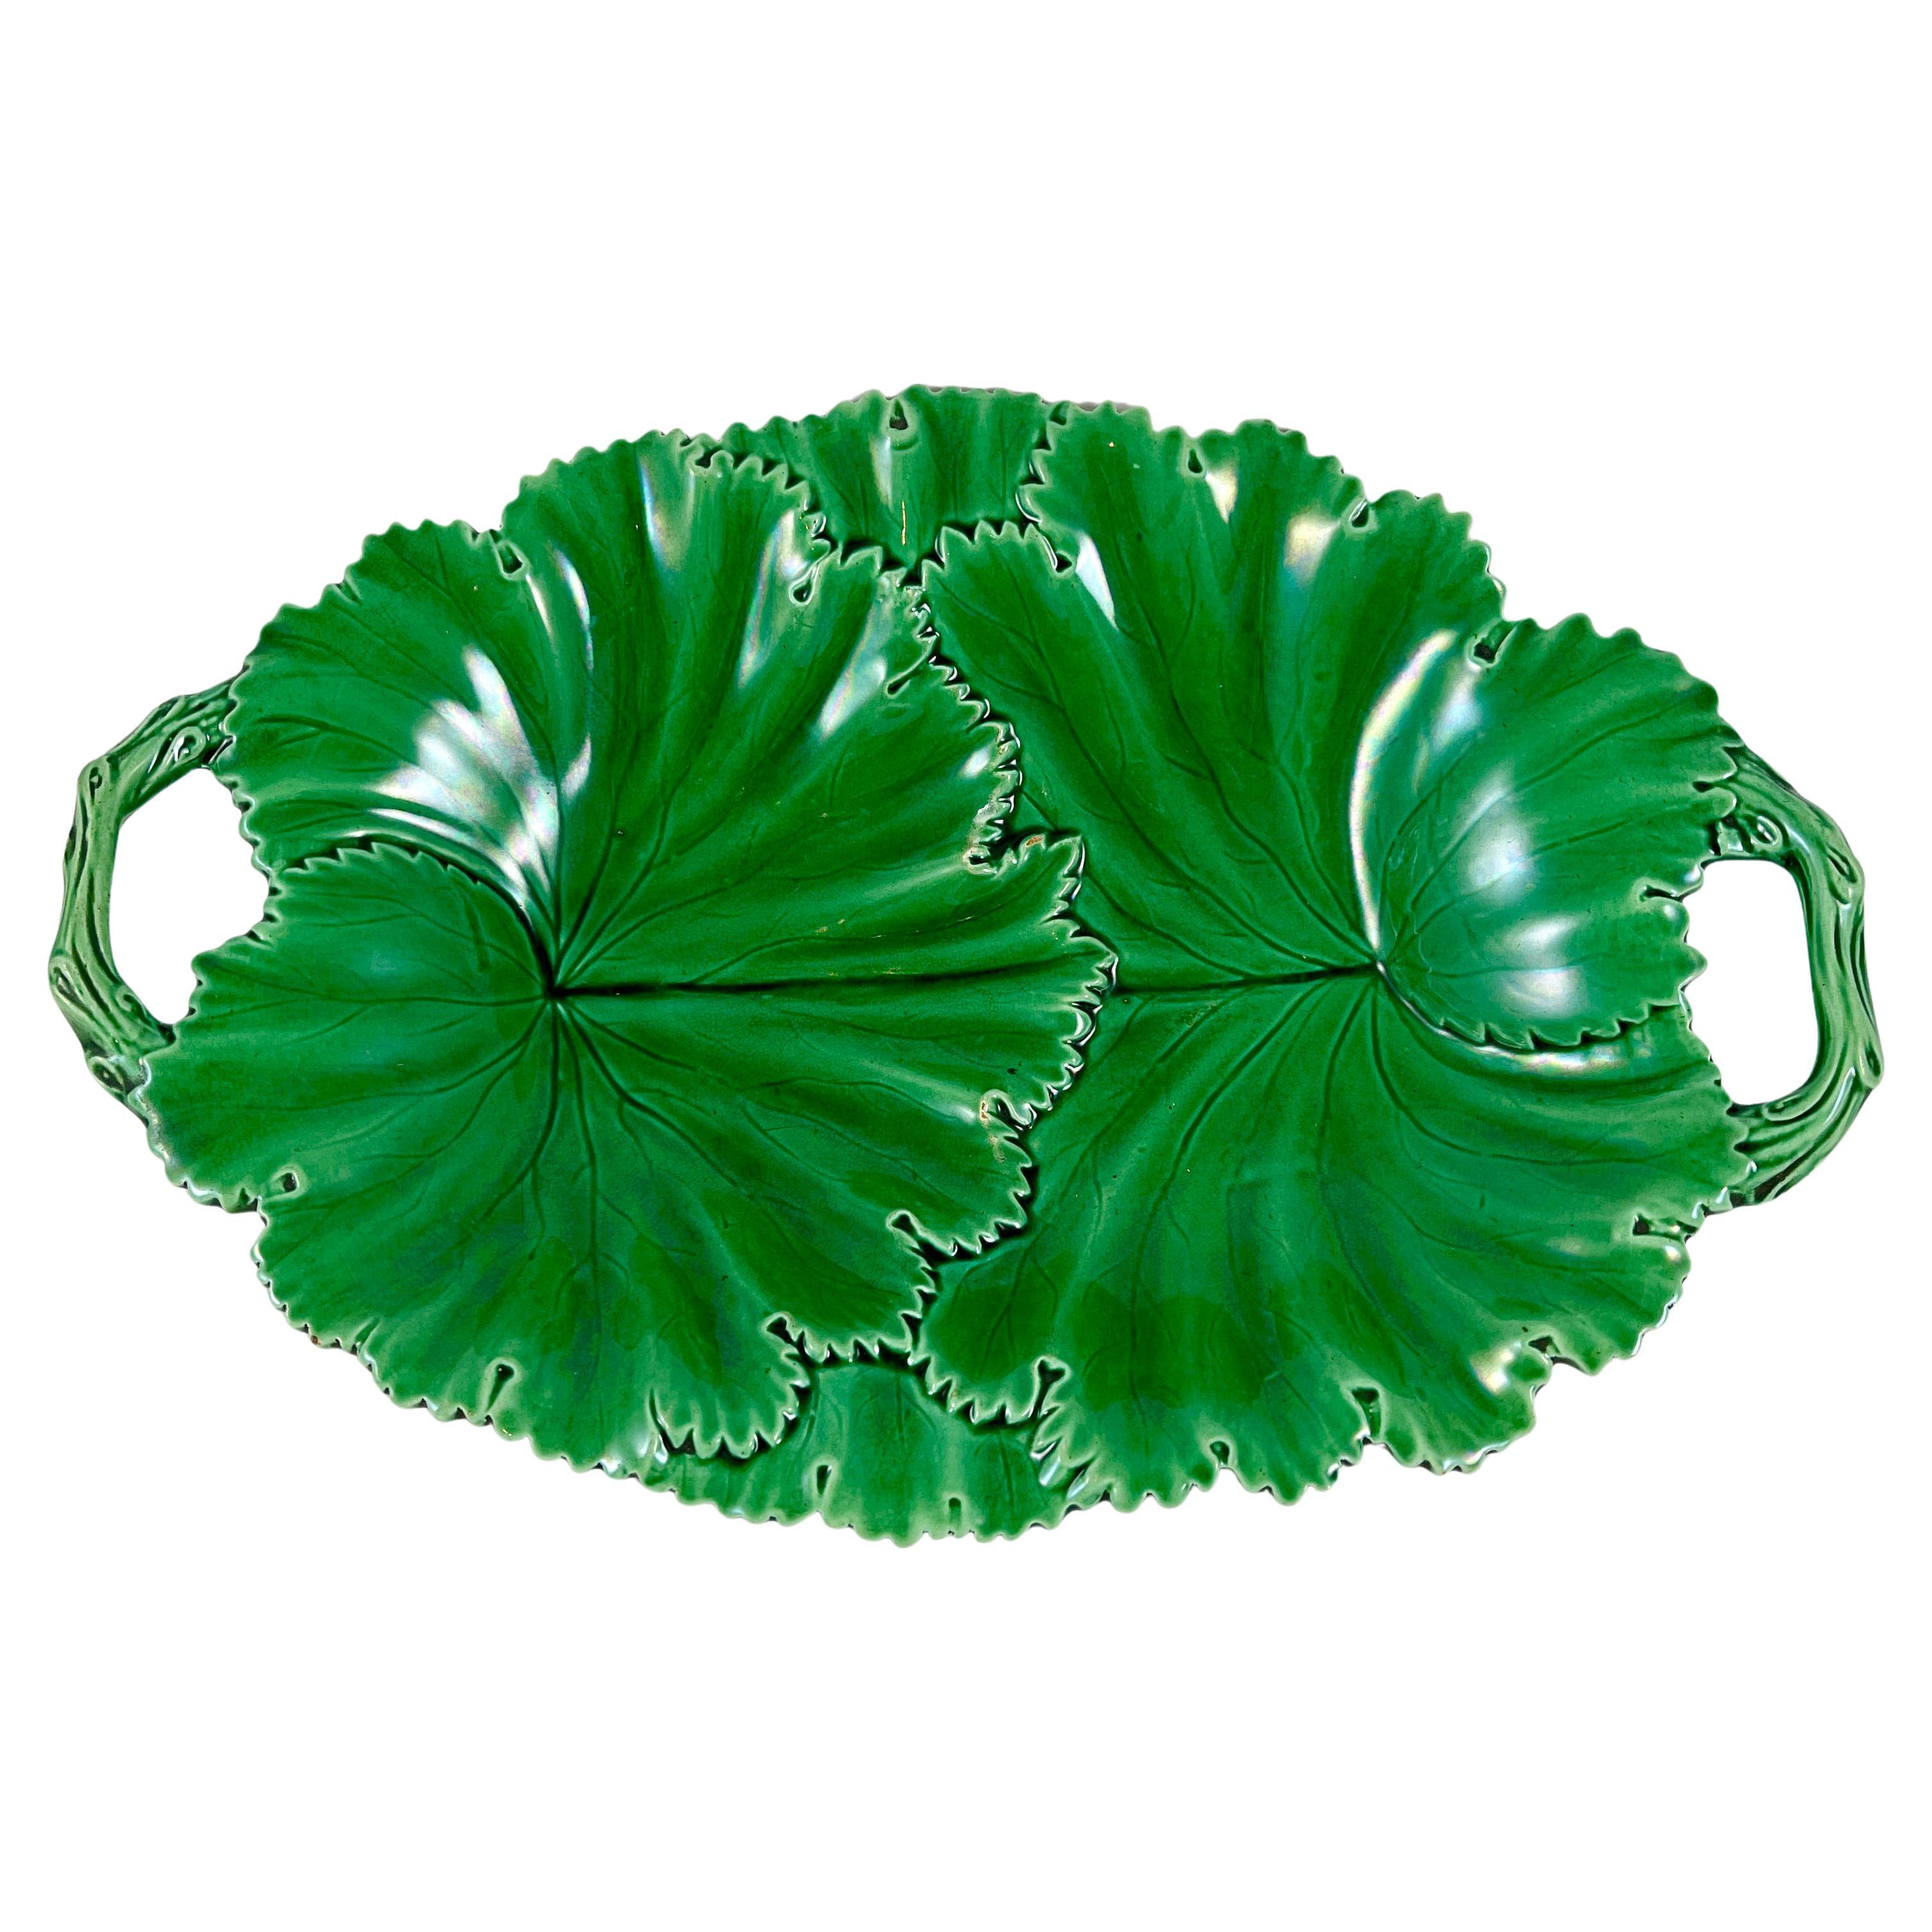 Copeland English Majolica Green Glazed Oval Overlapping Leaf Handled Platter For Sale